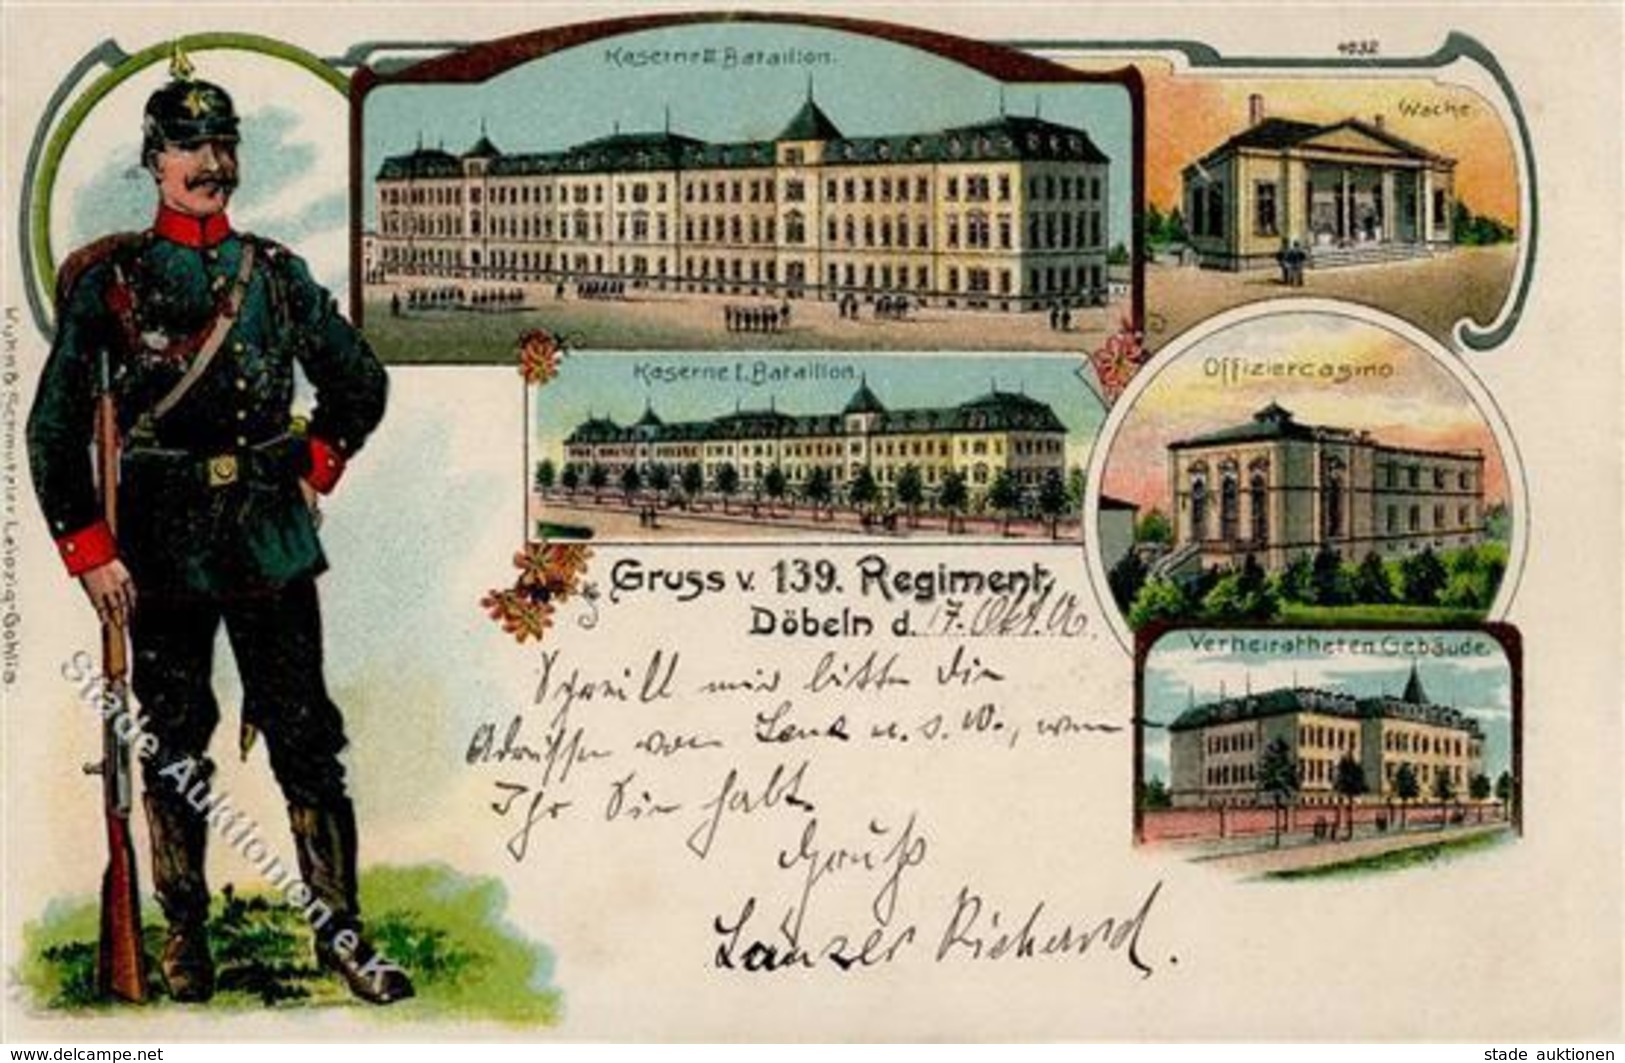 Regiment Döbeln (O7300) Nr. 139 Inf. Regt. Kaserne Wache Offizierskasino 1908 I-II - Regimente